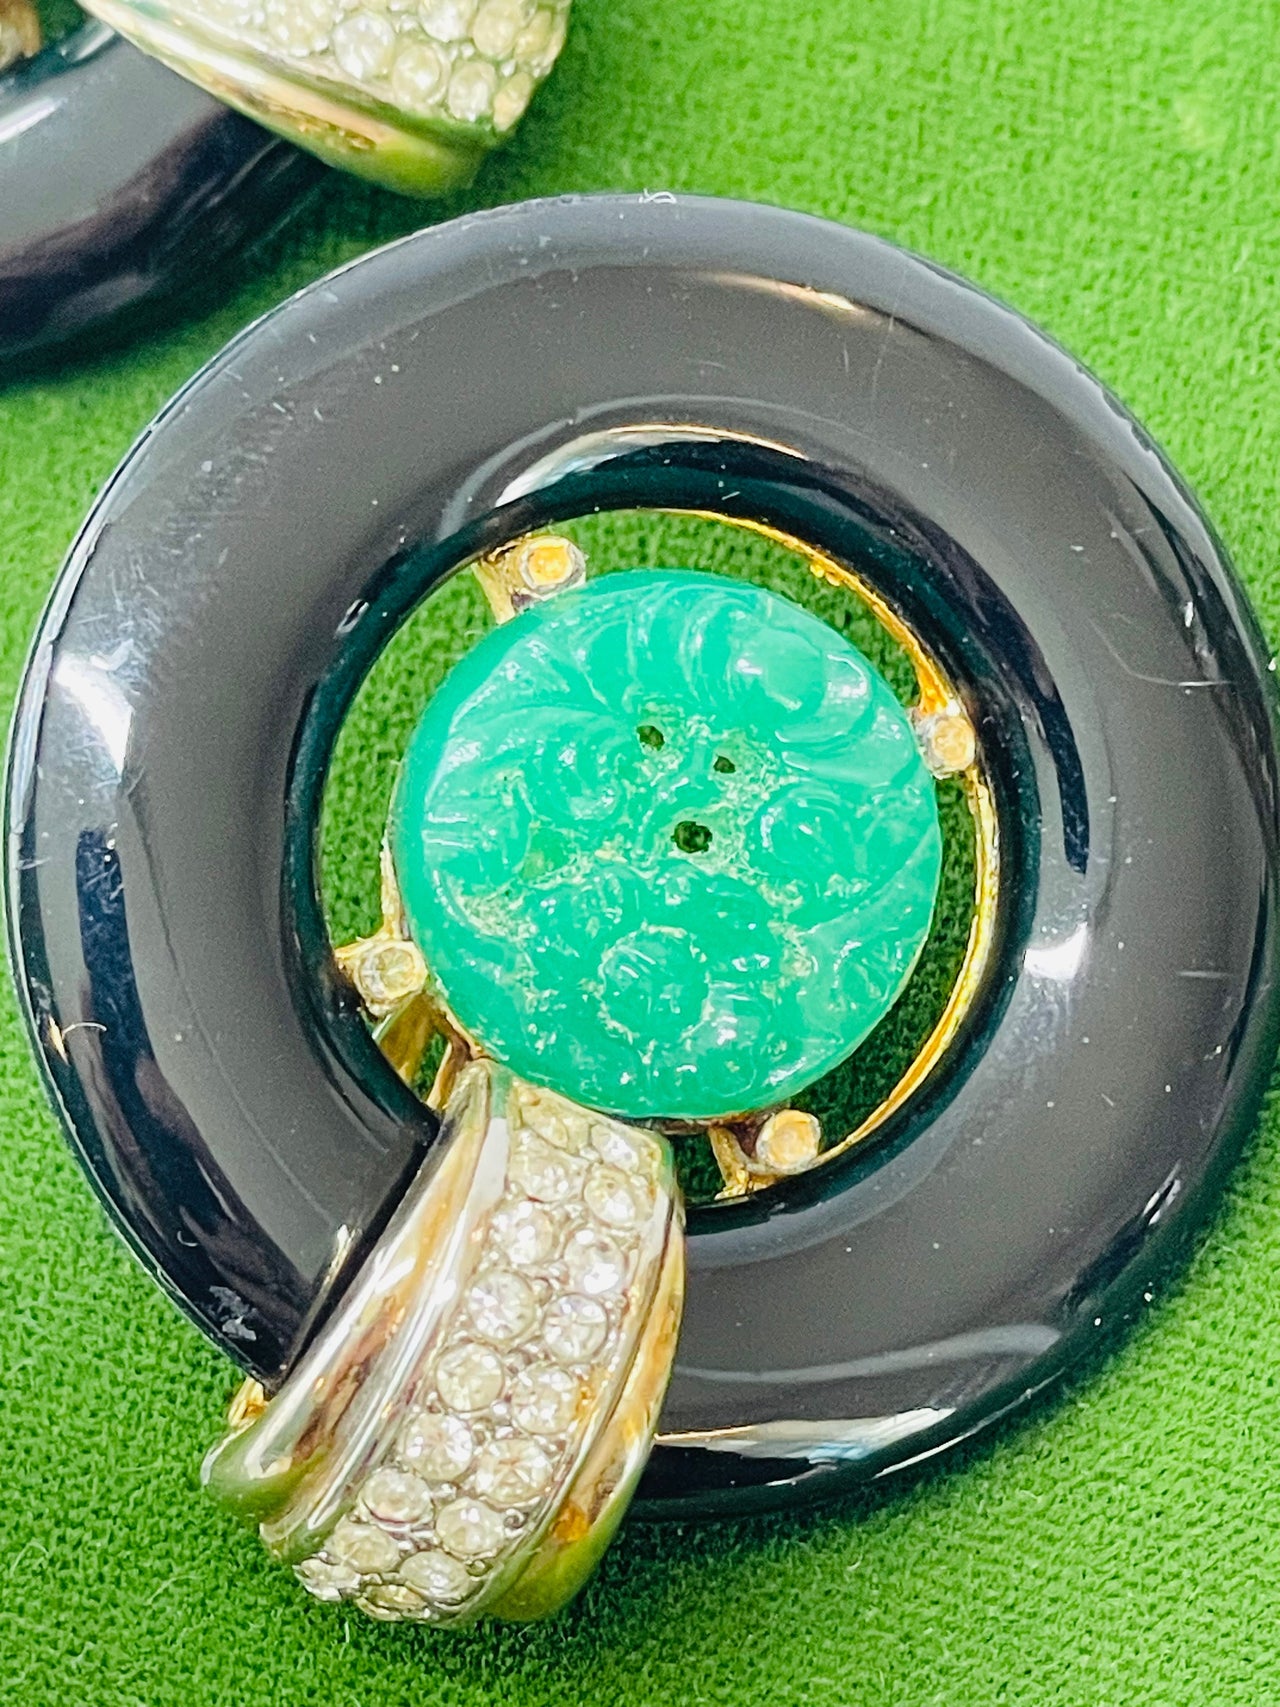 Signed Gem-Craft Vintage Faux Carved Jade Resin Rhinestone and Black Enamel Earrings and Necklace Set Devil's Details 